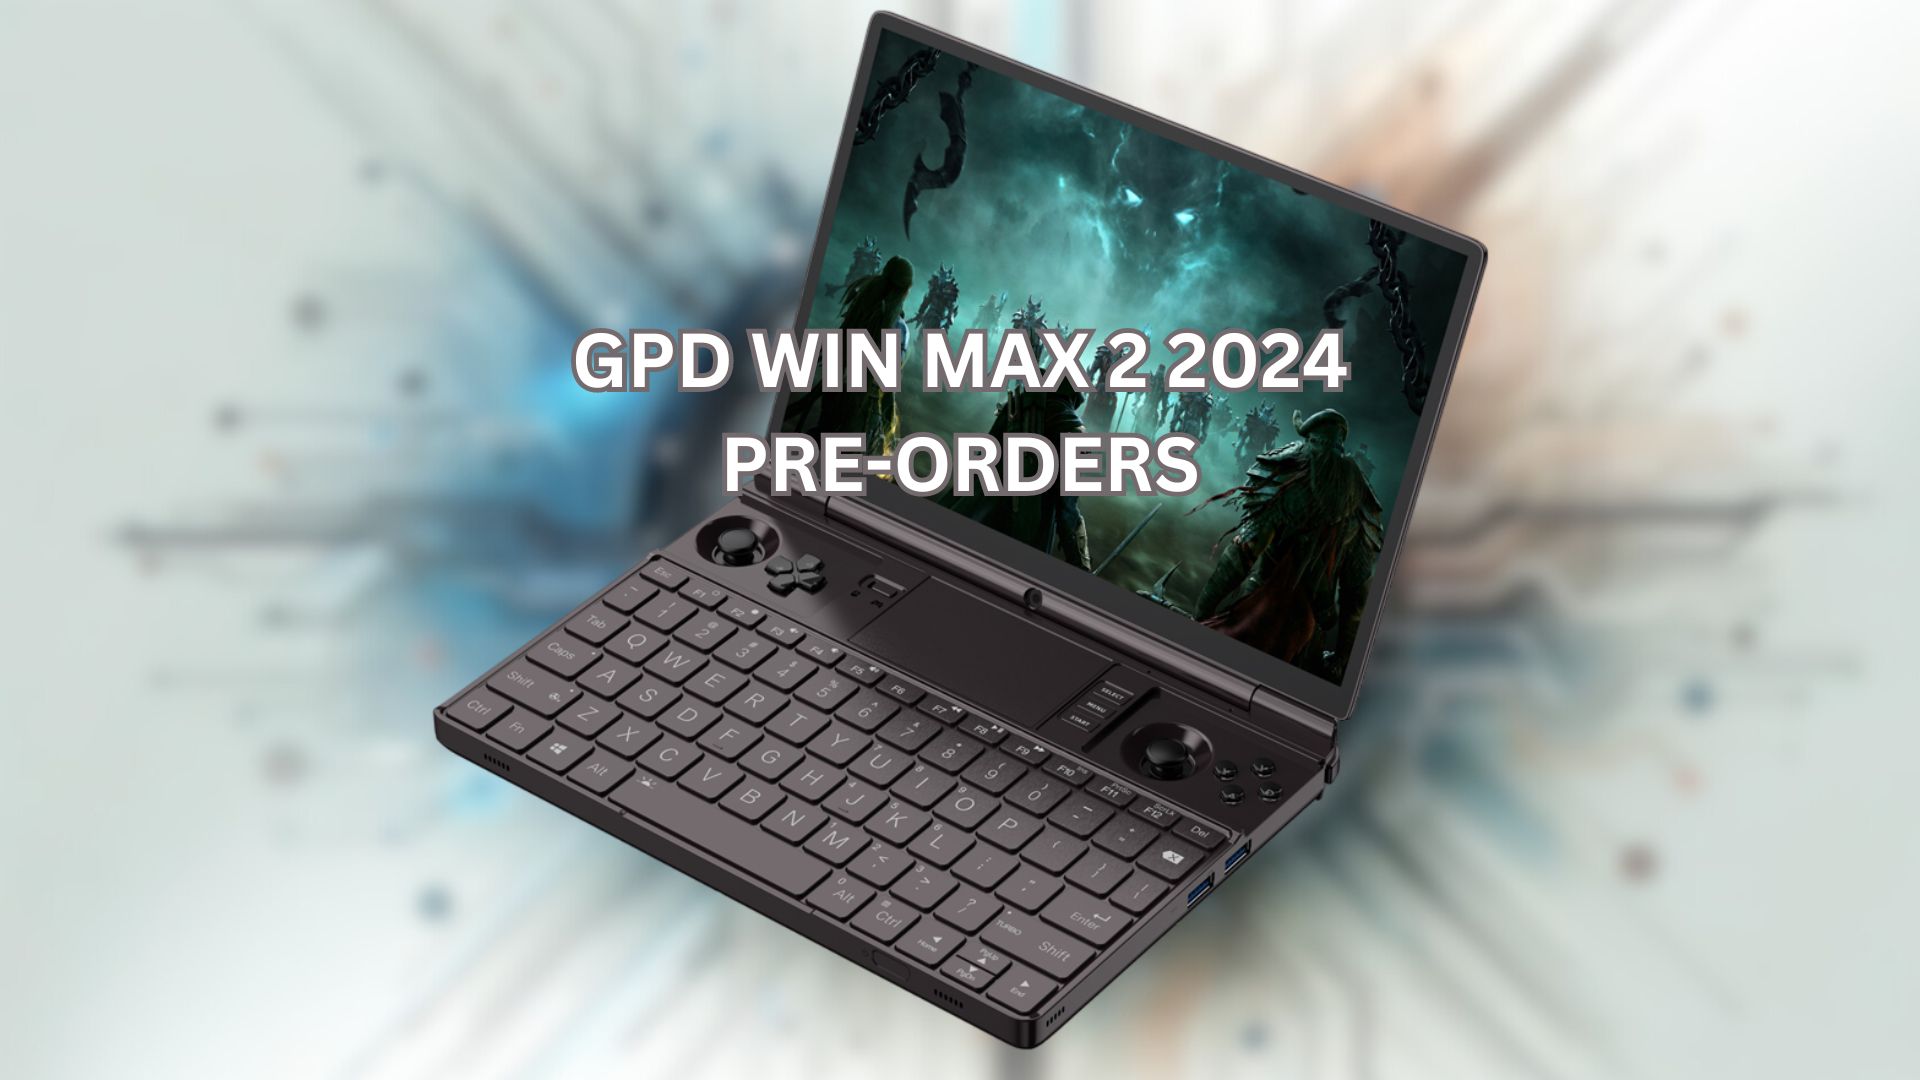 GPD WIN MAX  2 2024 pre-orders - De ultieme handheld gaming PC